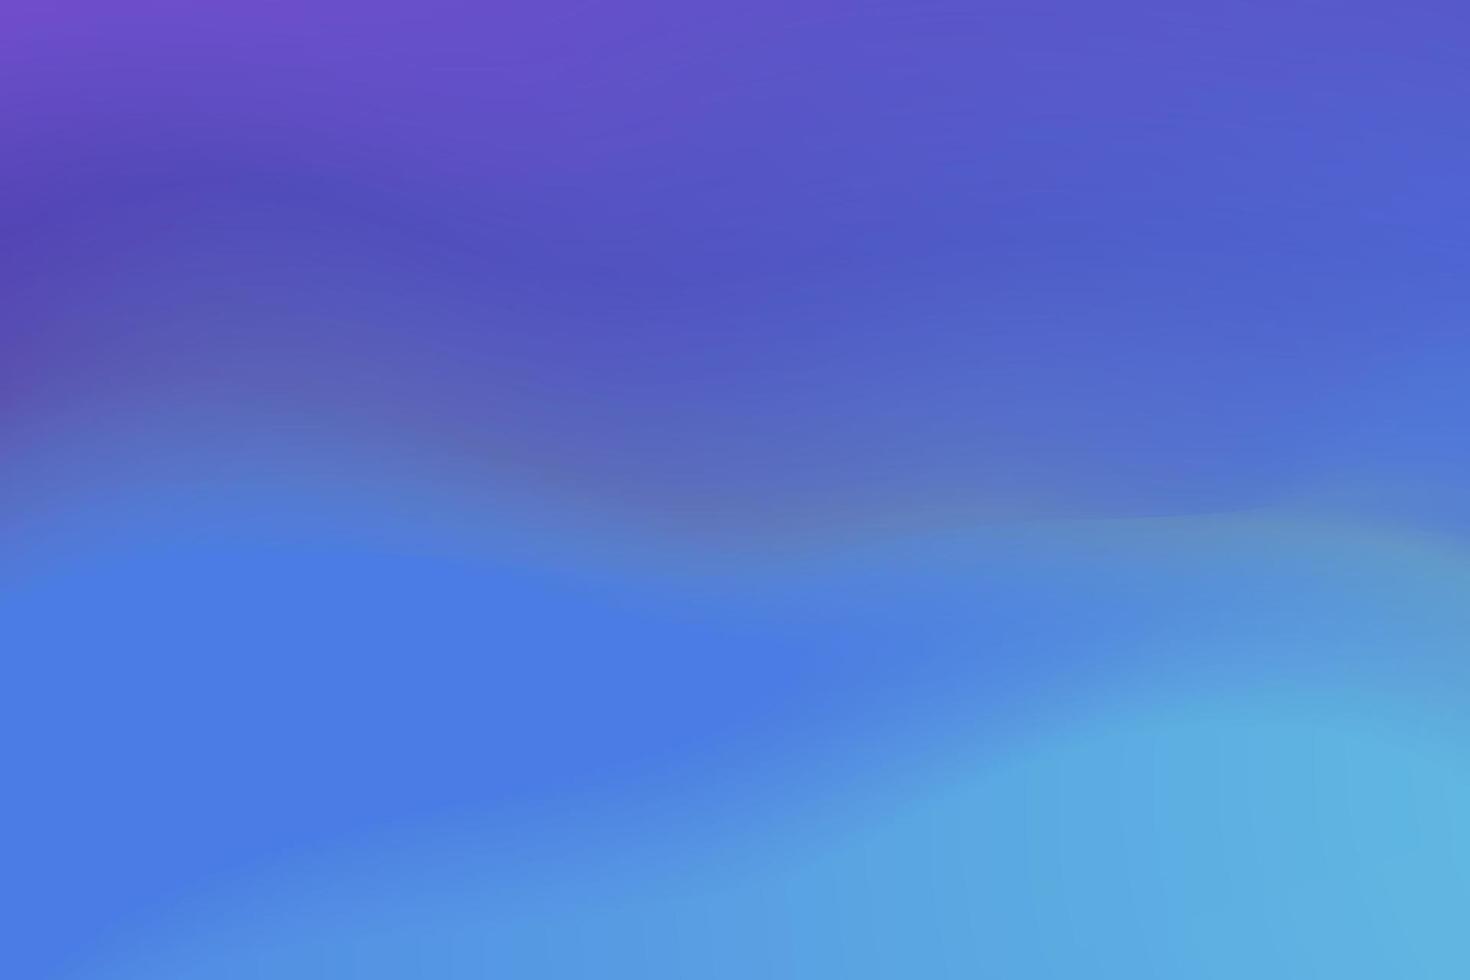 blue gradient abstract wallpaper modern background vector